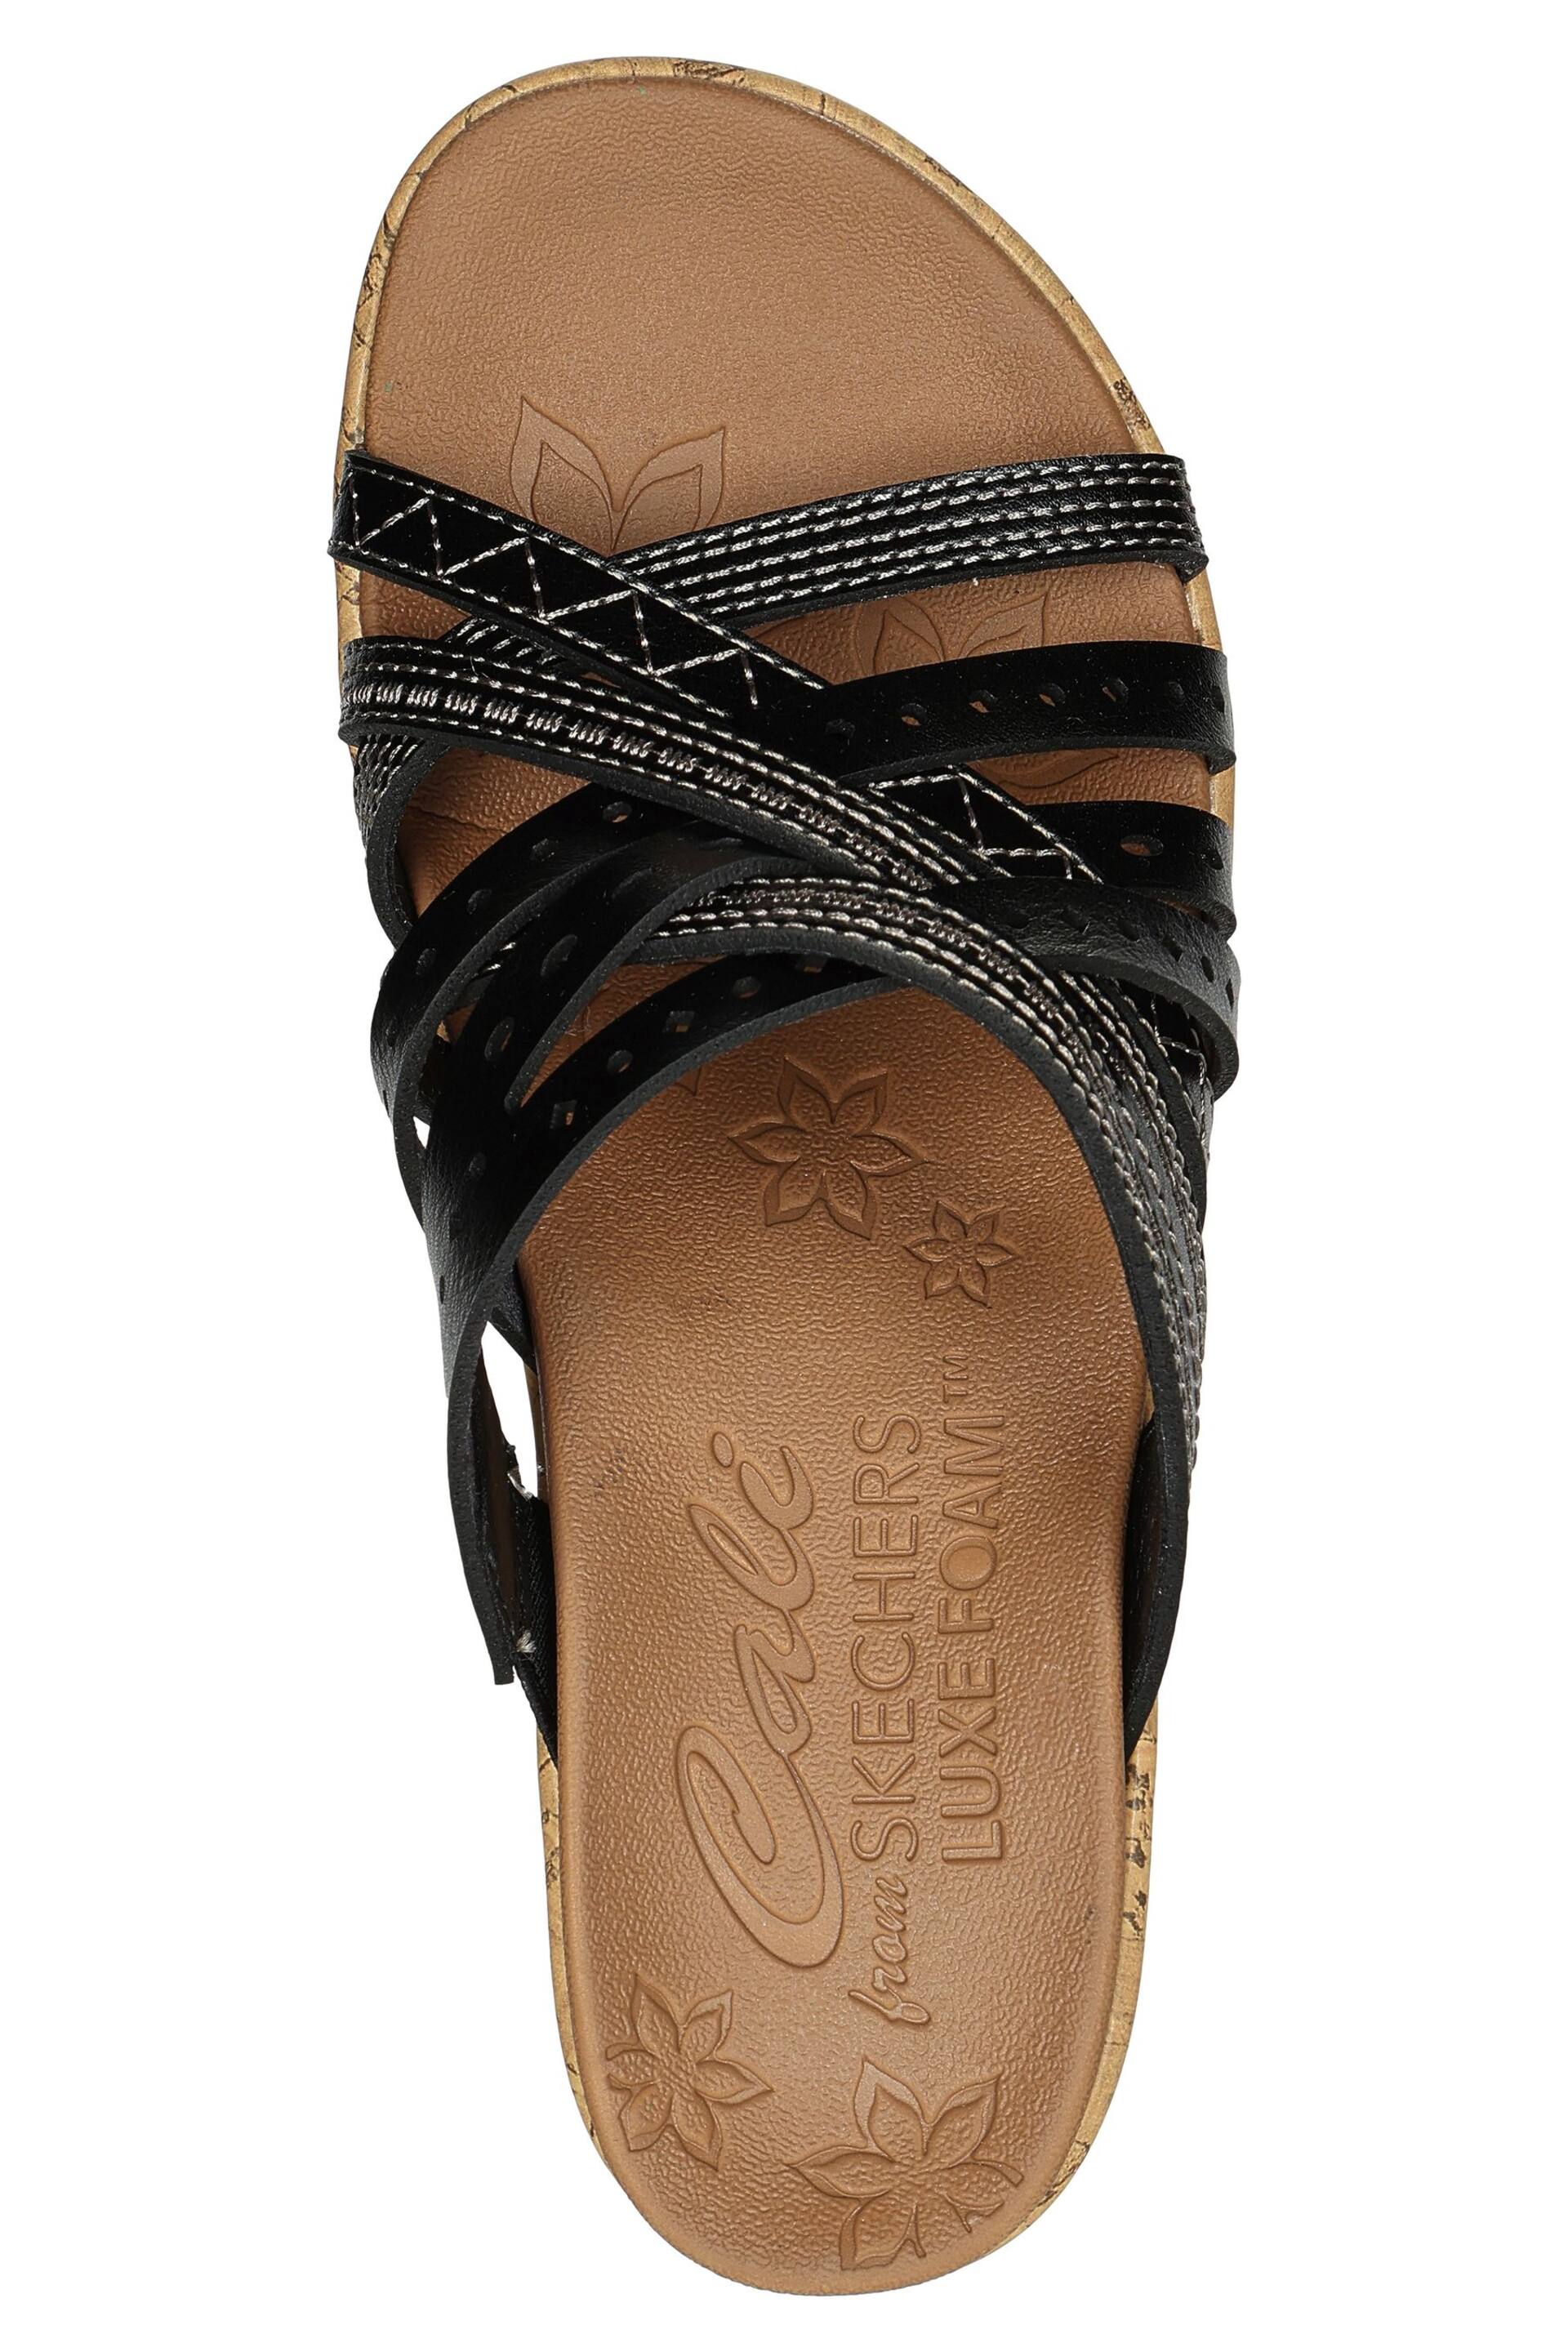 Skechers Black Beverlee Hot Spring Sandals - Image 4 of 5